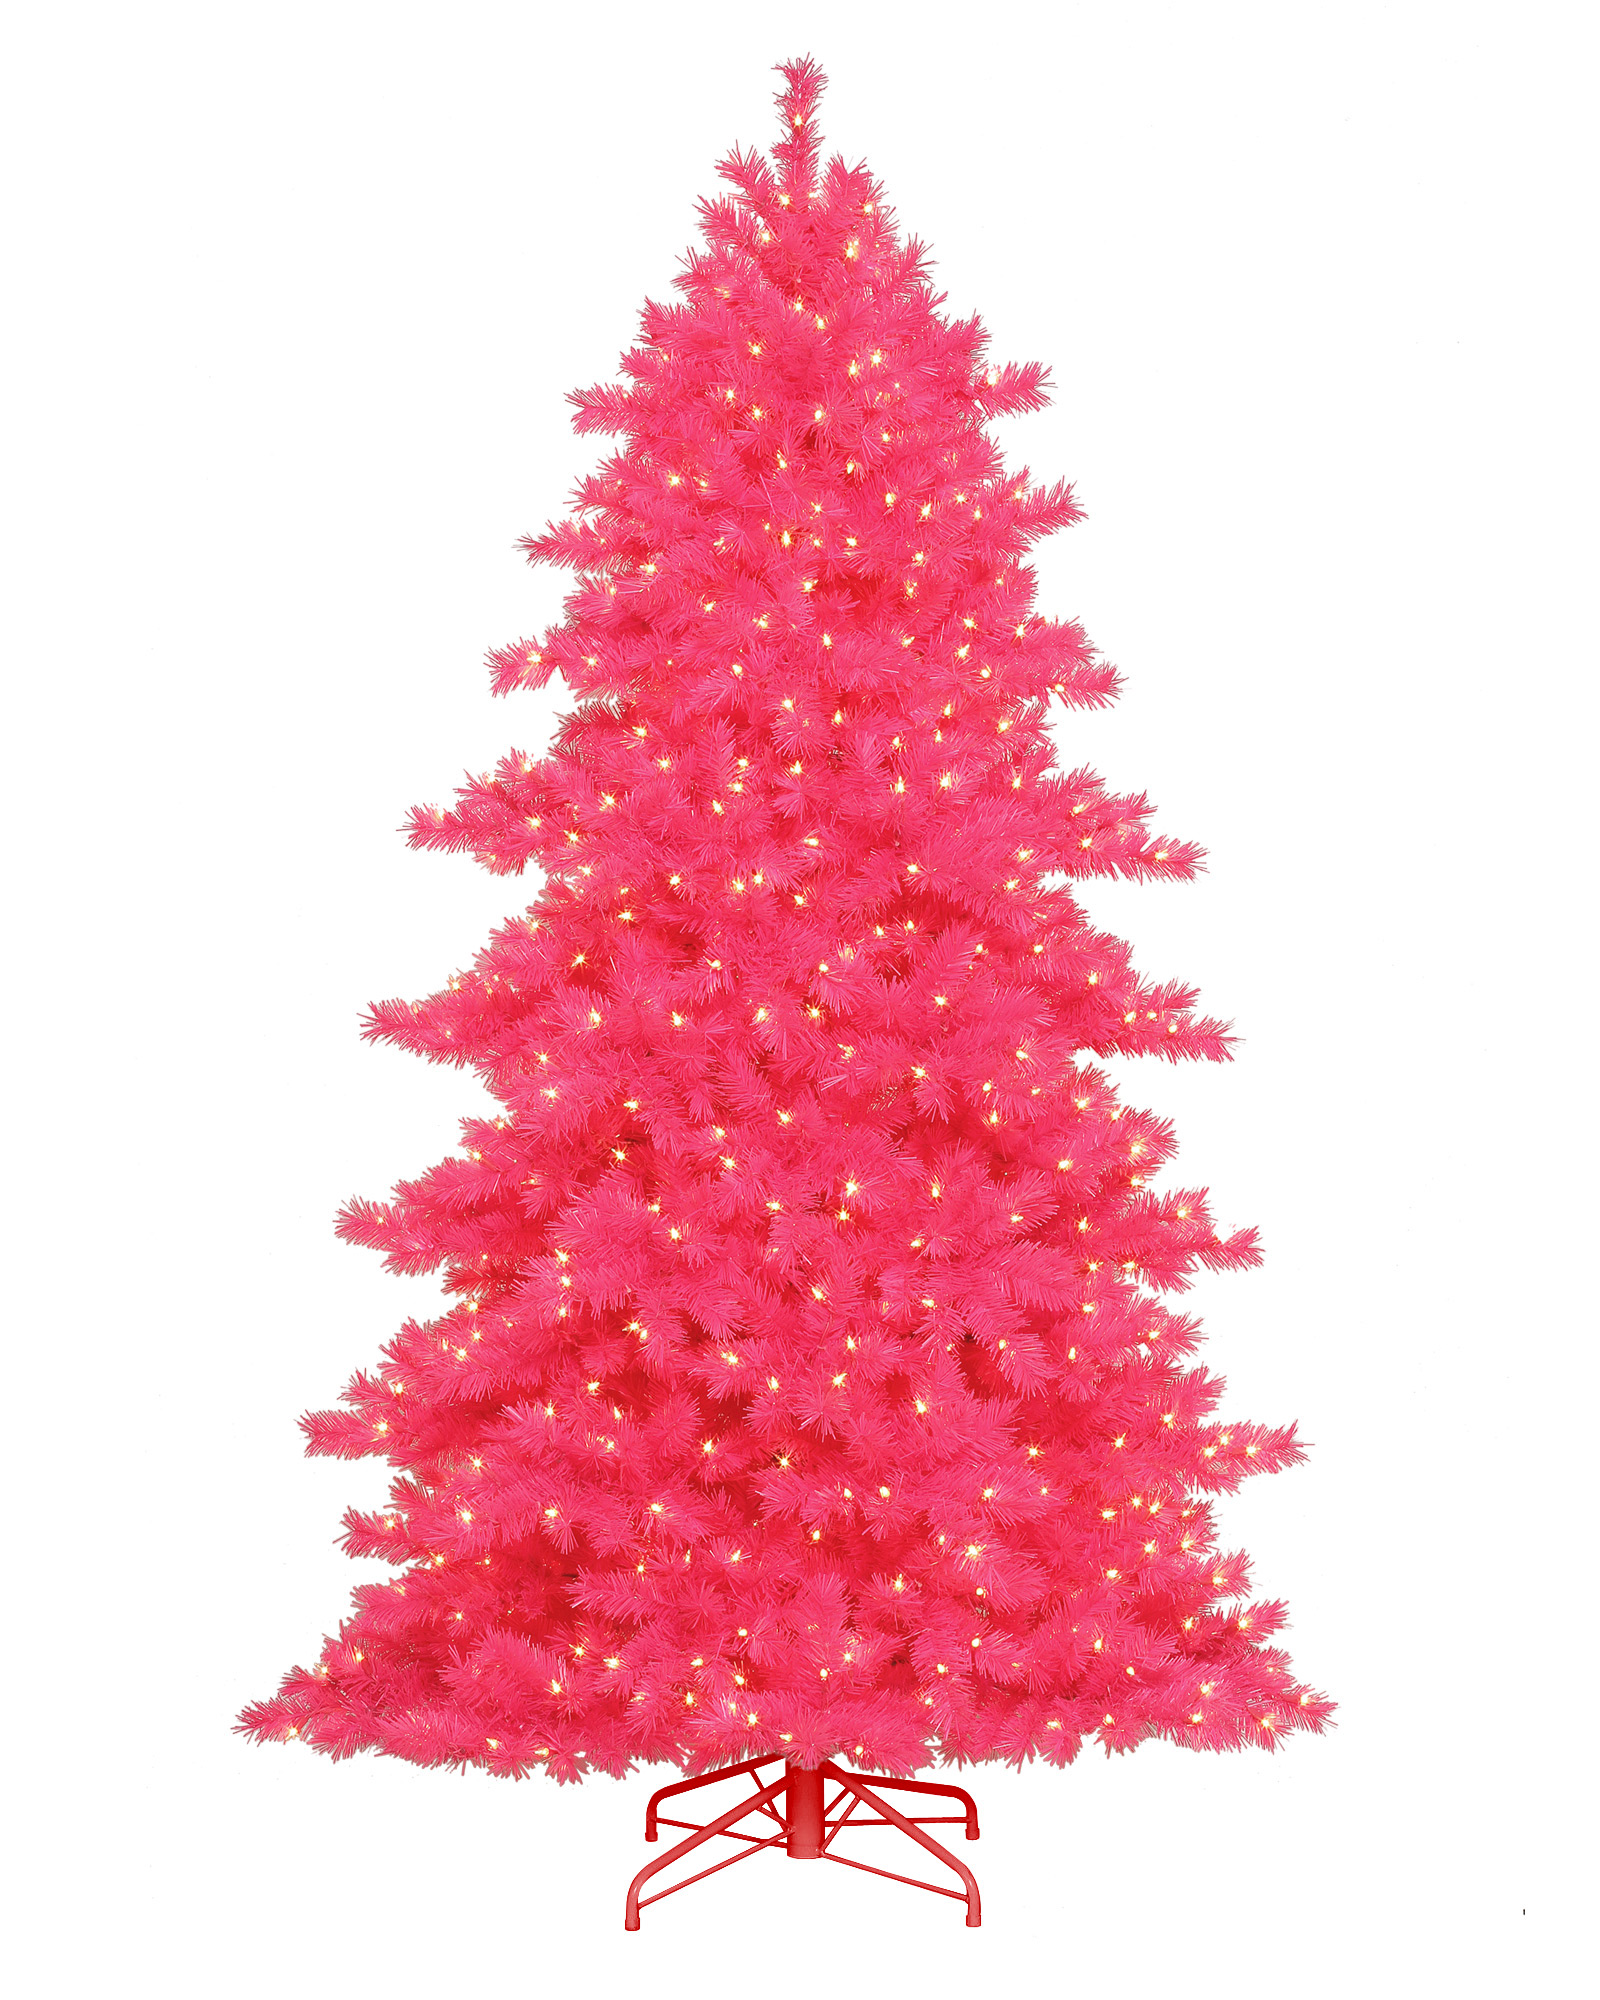 Some Like It Hot Pink Christmas Tree | Treetopia